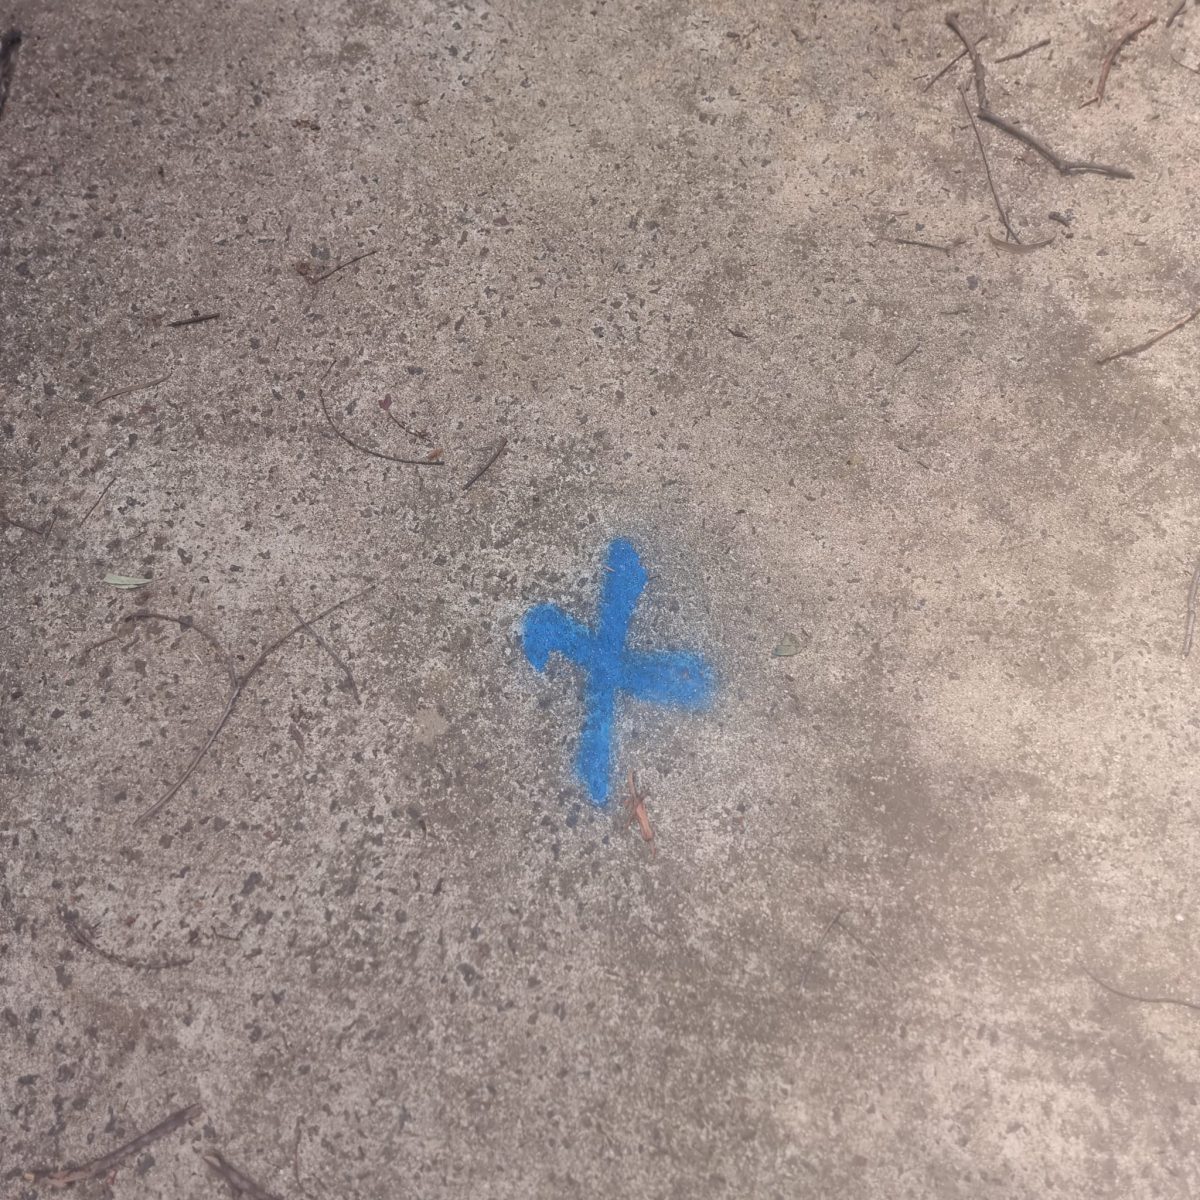 Spraypainted X mark on concrete